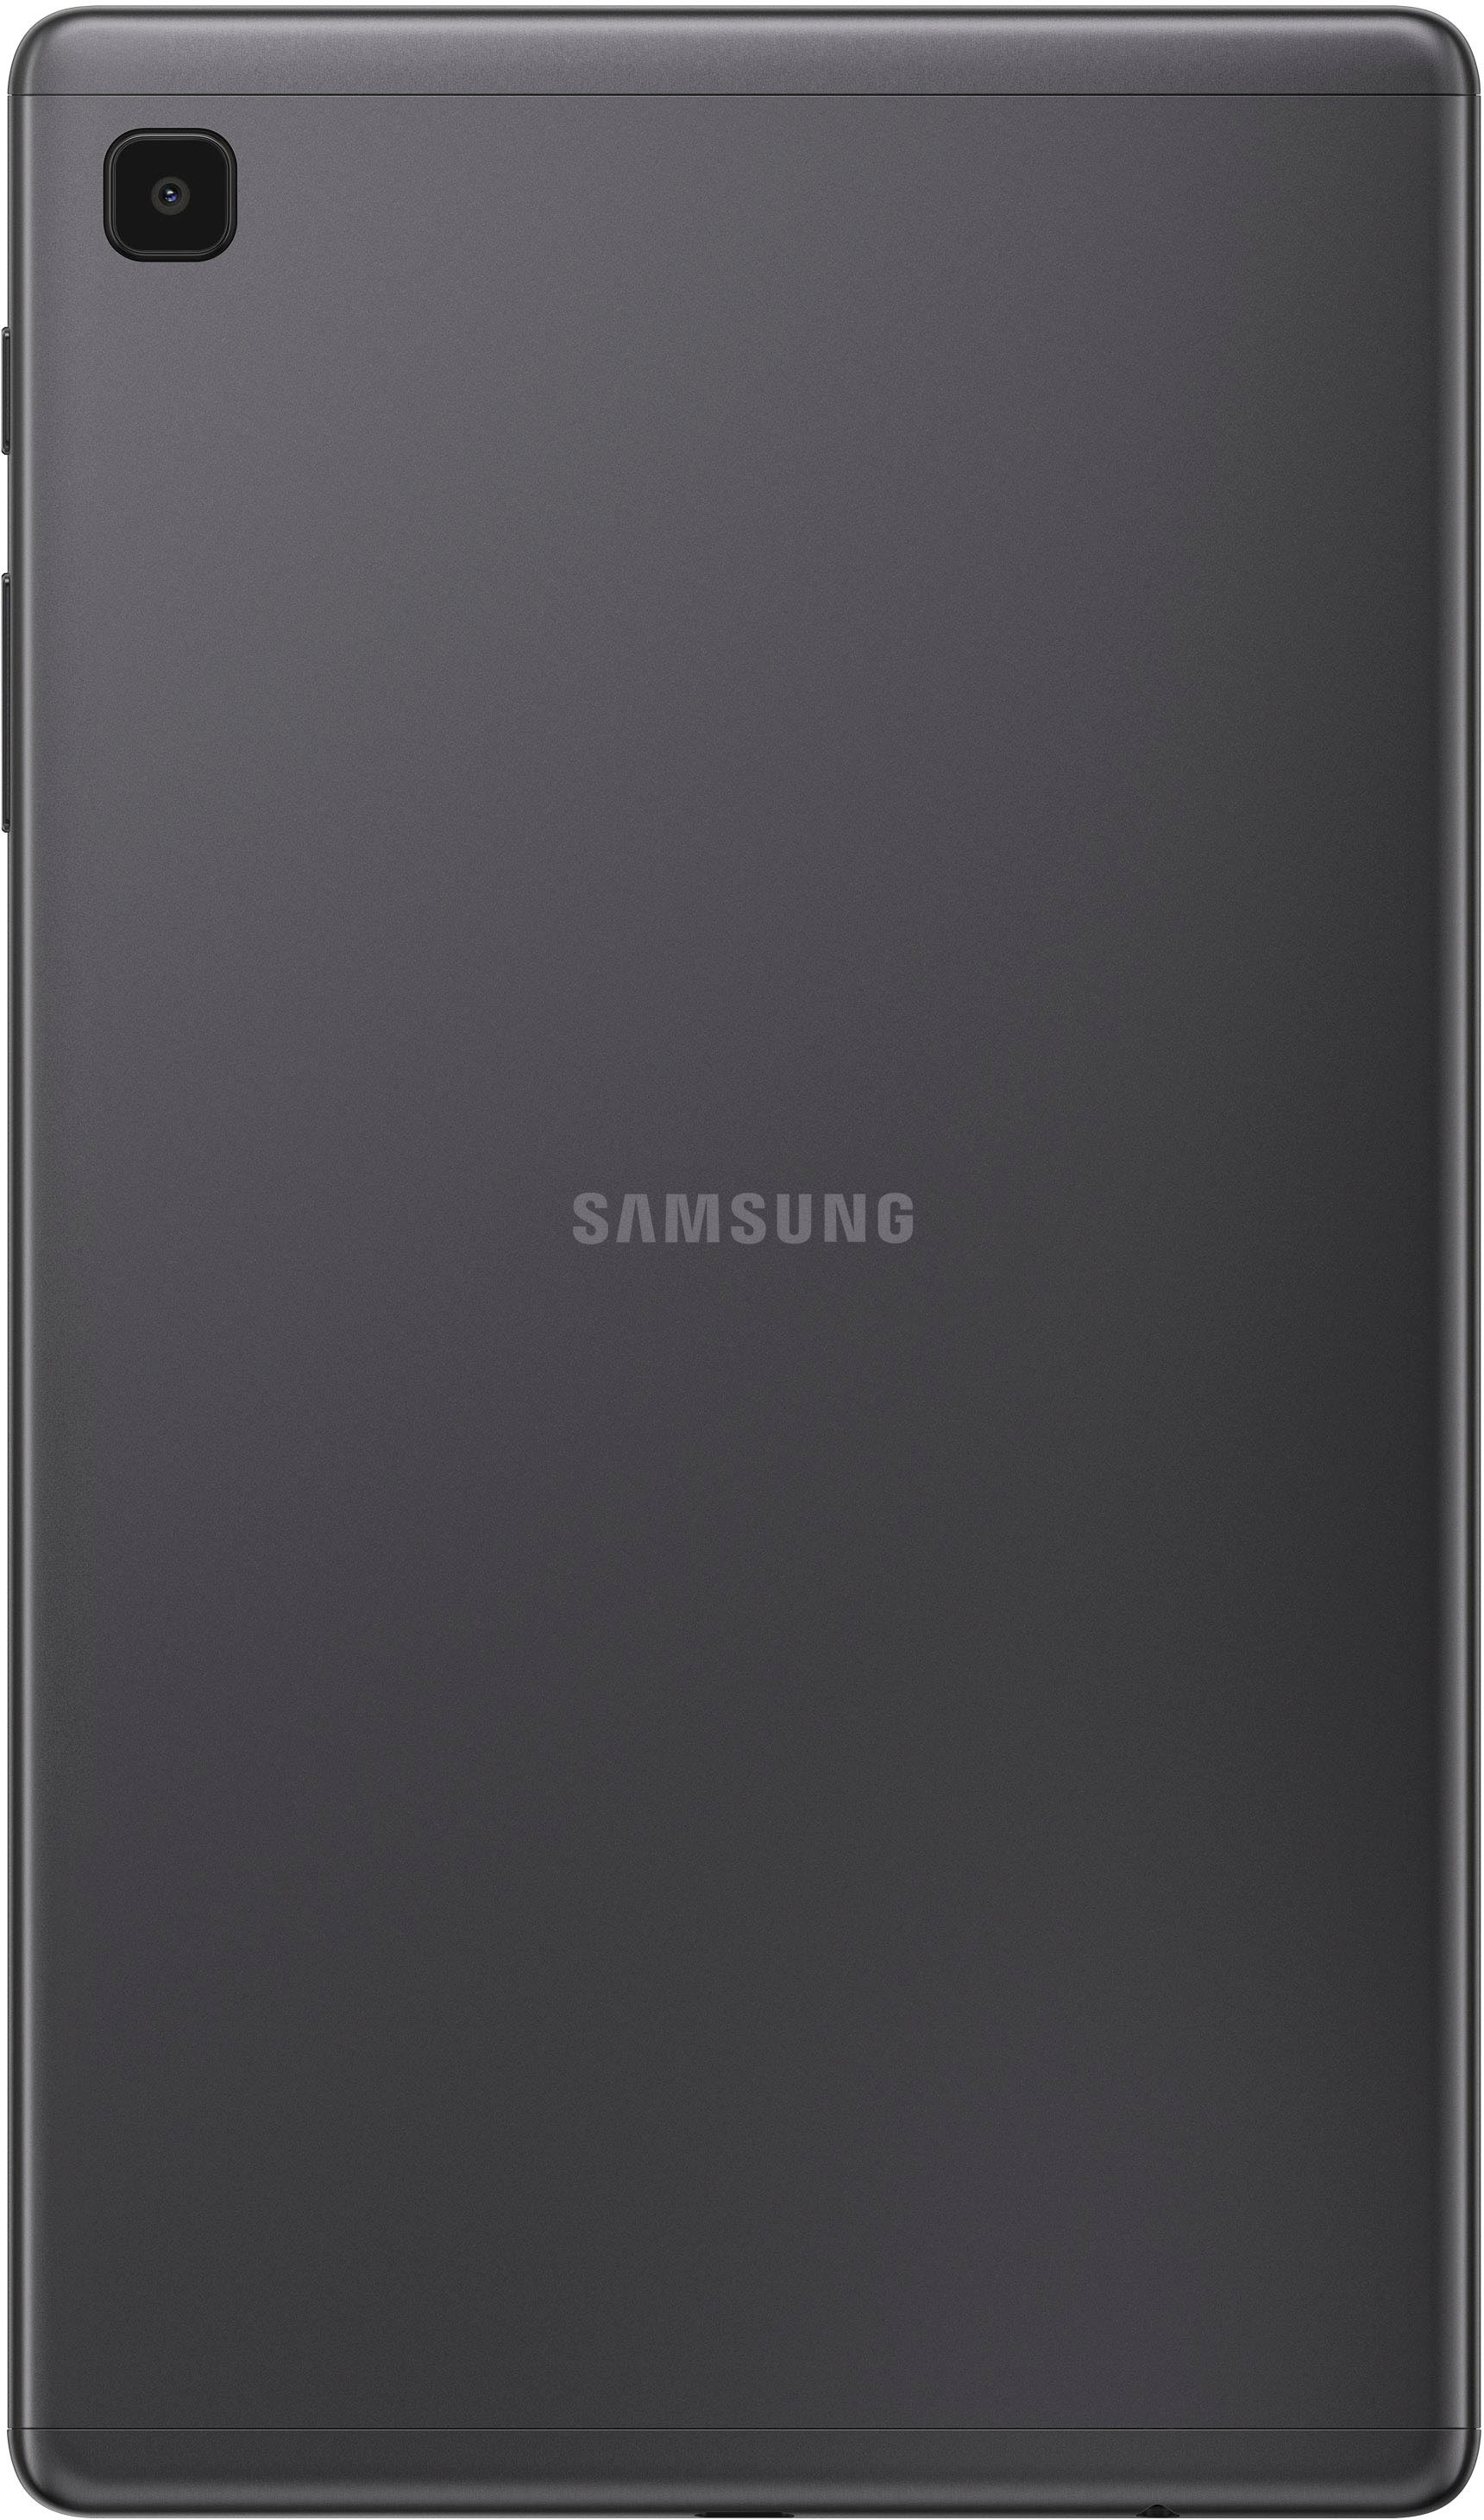 Samsung Galaxy Tab Lite 8 7 32gb With Wi Fi Dark Gray Sm T2nzaaxar Best Buy